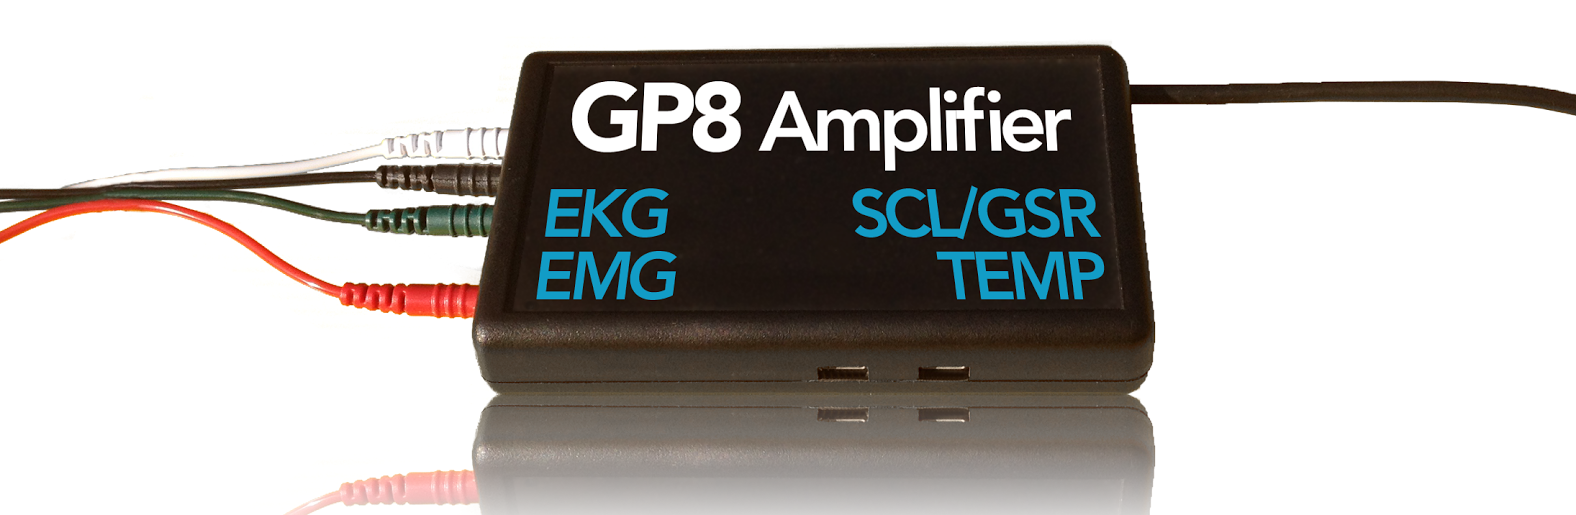 GP8 Amplifier